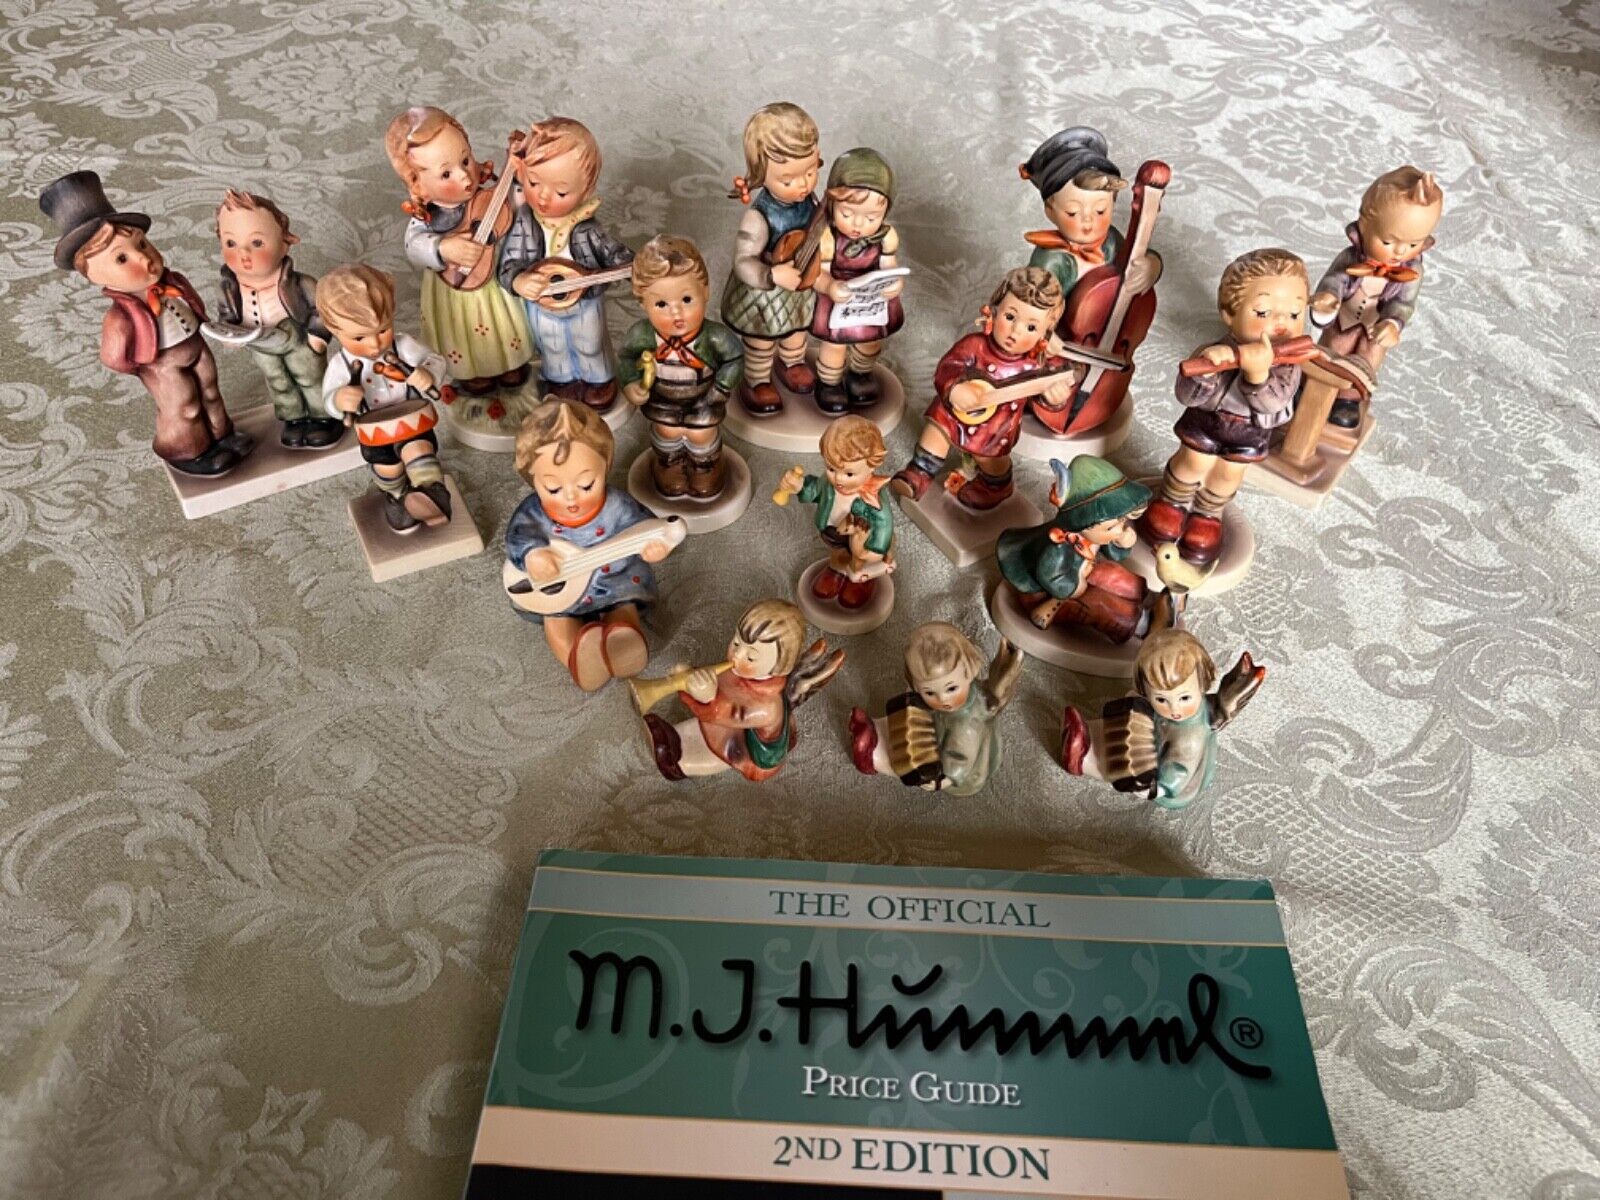 Hummel figurines- make offer for complete collection